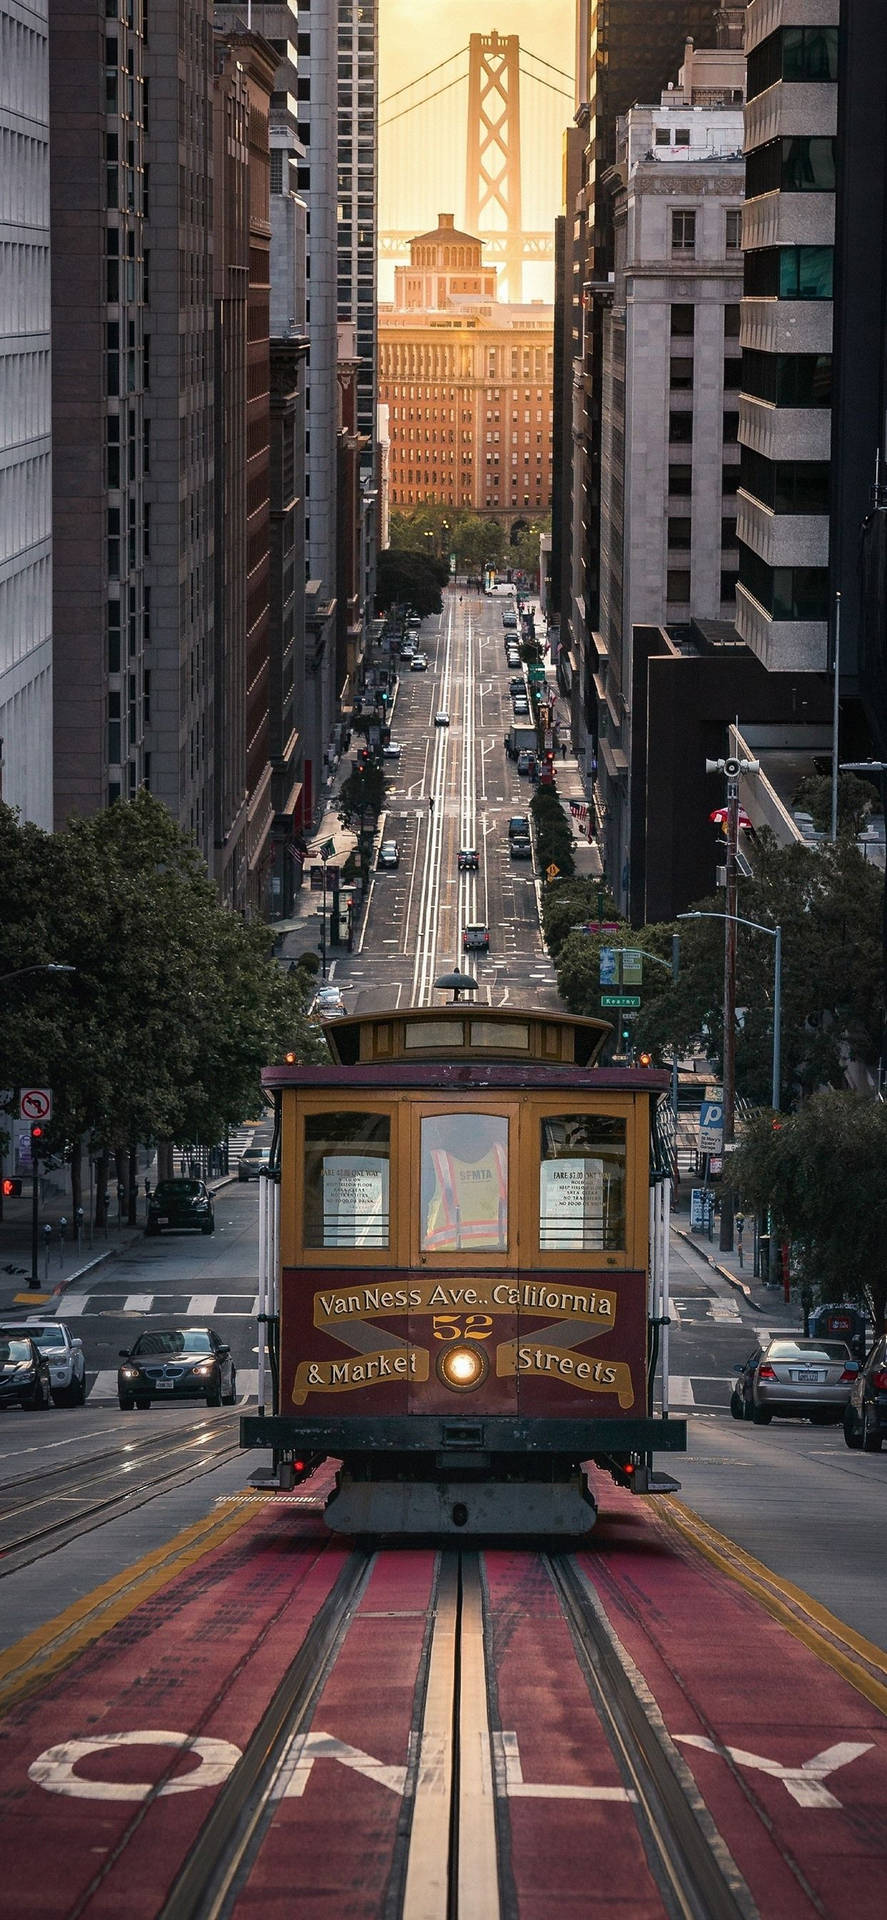 San Francisco Phone Cable Car Sunset Wallpaper